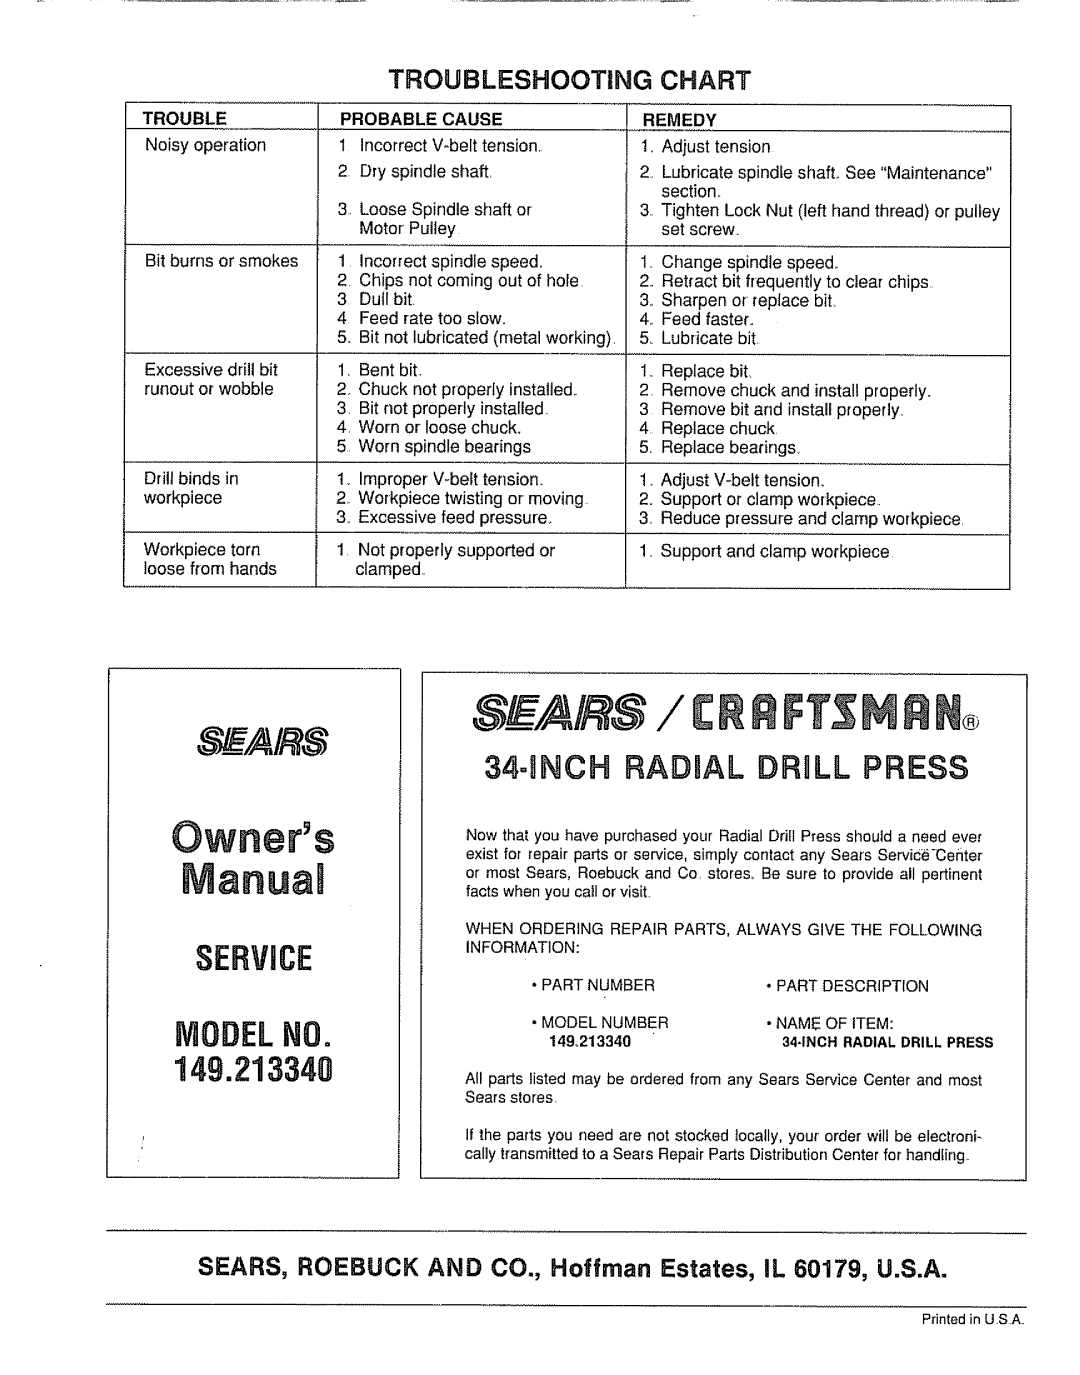 Sears 149.213340 Bnch Radbal Drill Press, Troubleshooting, Chart, SEARS, ROEBUCK AND CO., Hoffman Estates, IL 60179, U.S.A 